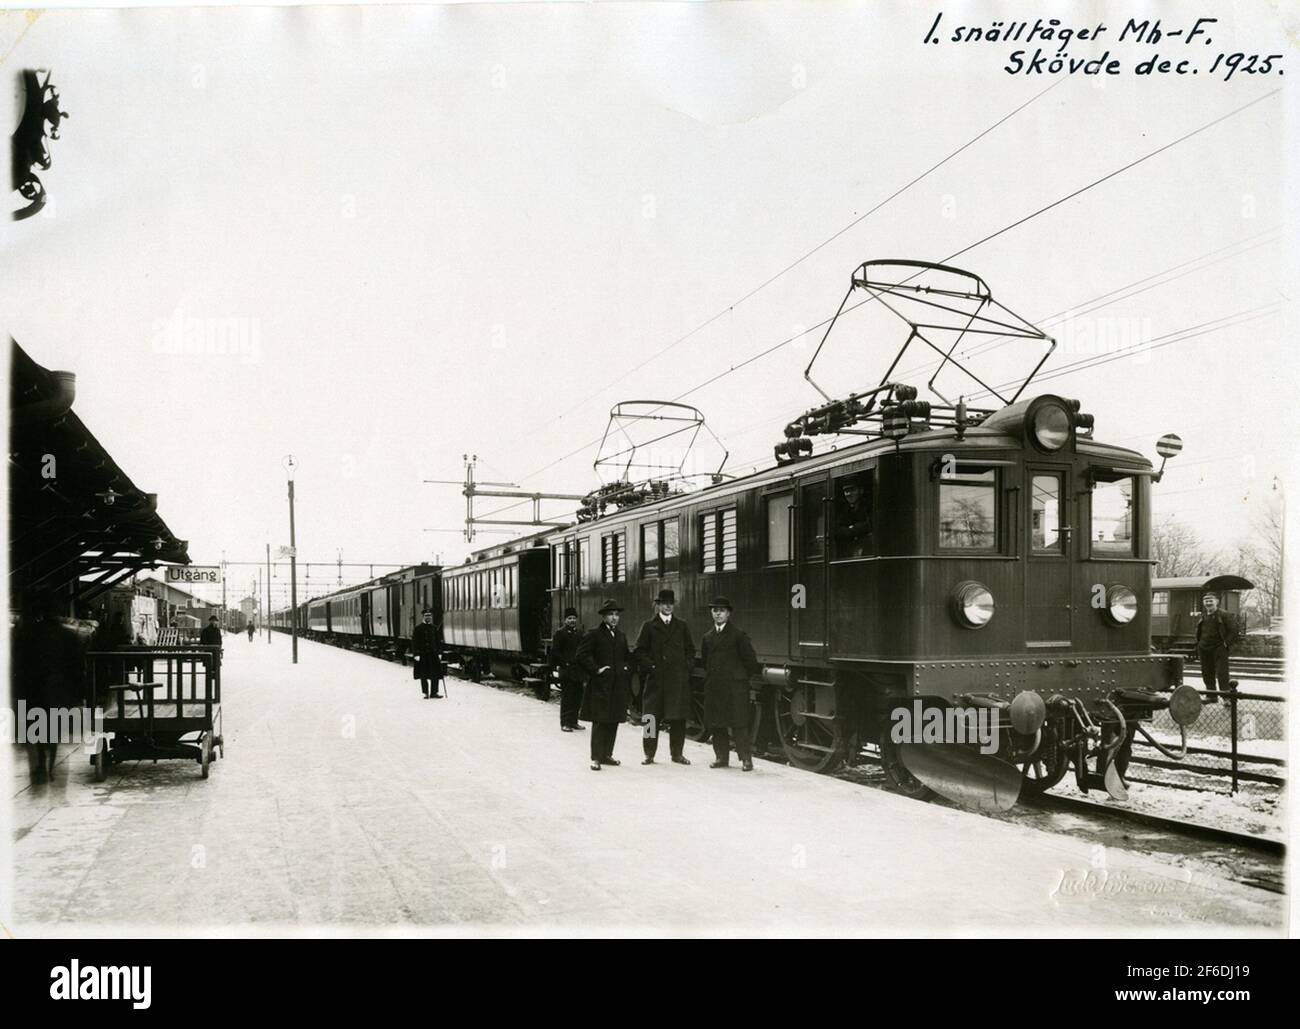 Bahnhof Skövde 1925-12.Lok SJ D10X (106.109.108?). Der freundliche Zug MH-F. Stockfoto